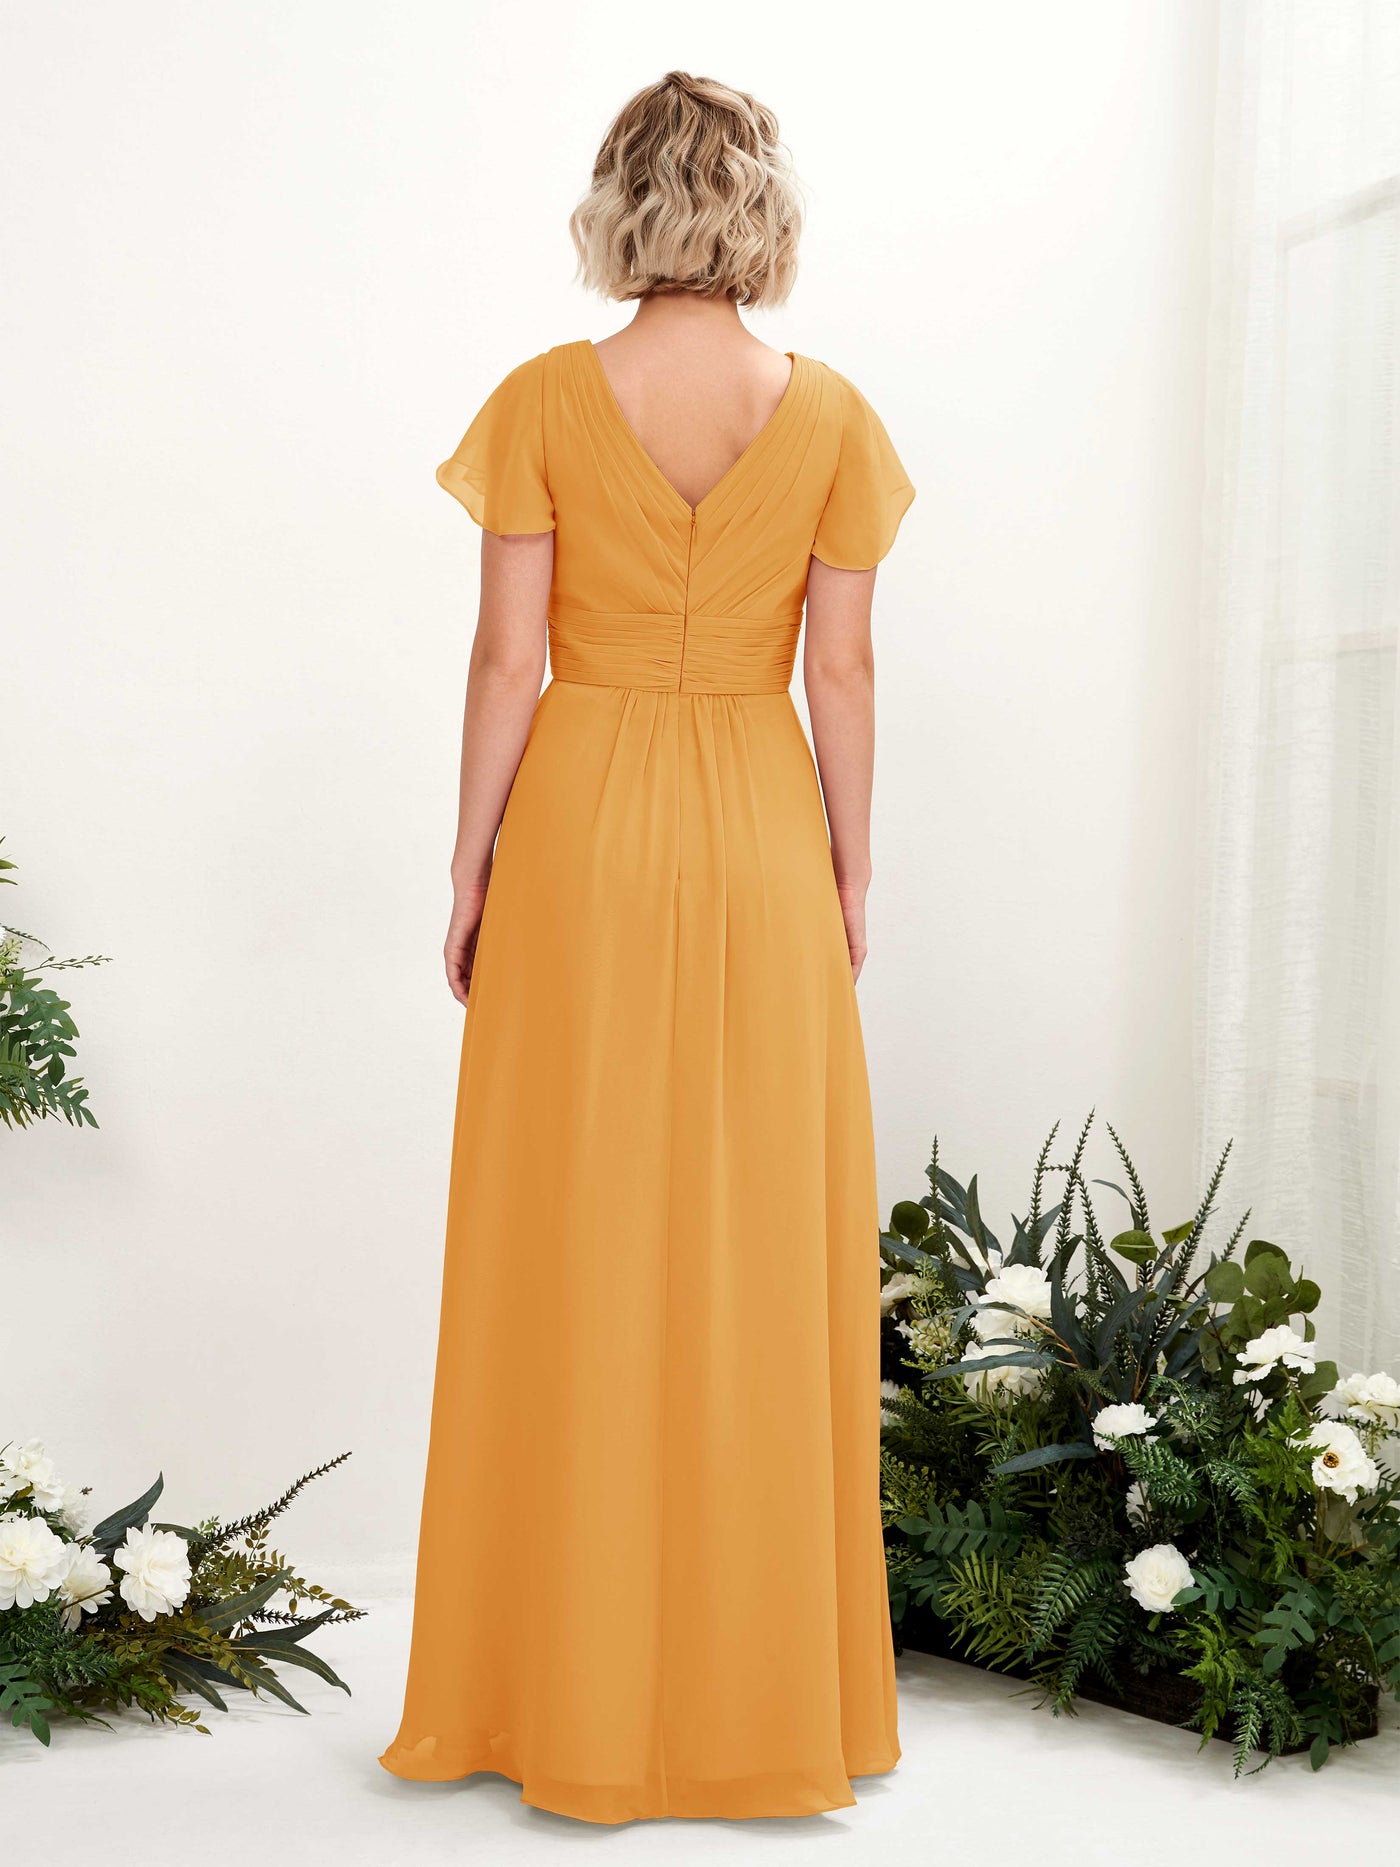 Mango Bridesmaid Dresses Bridesmaid Dress A-line Chiffon V-neck Full Length Short Sleeves Wedding Party Dress (81224302)#color_mango